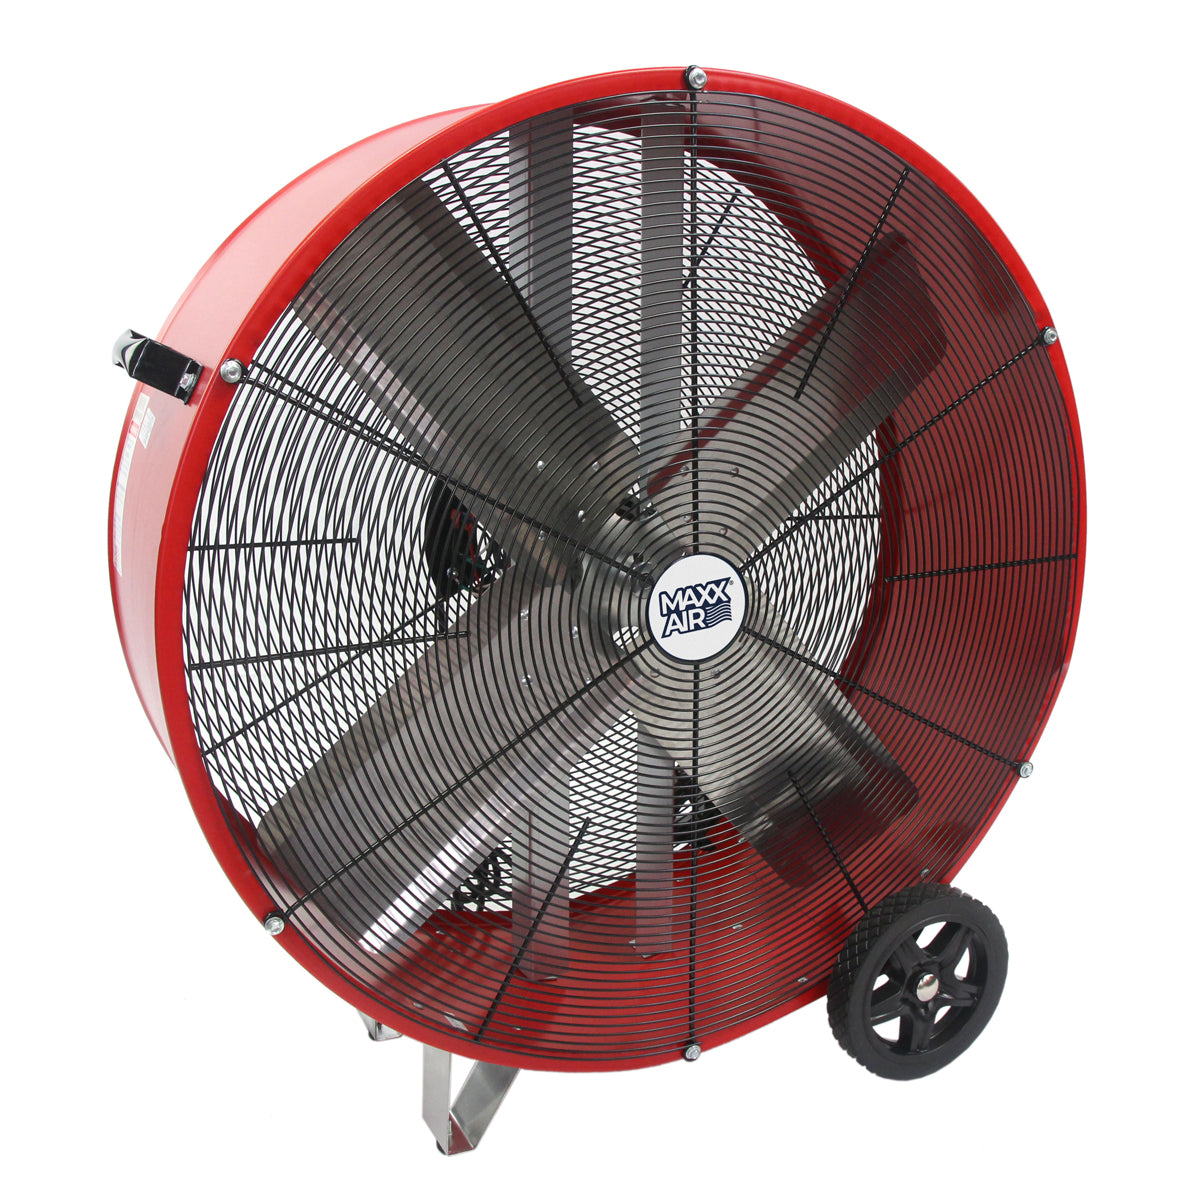 Maxx Air 36 In. 2-Speed Direct Drive Drum Fan